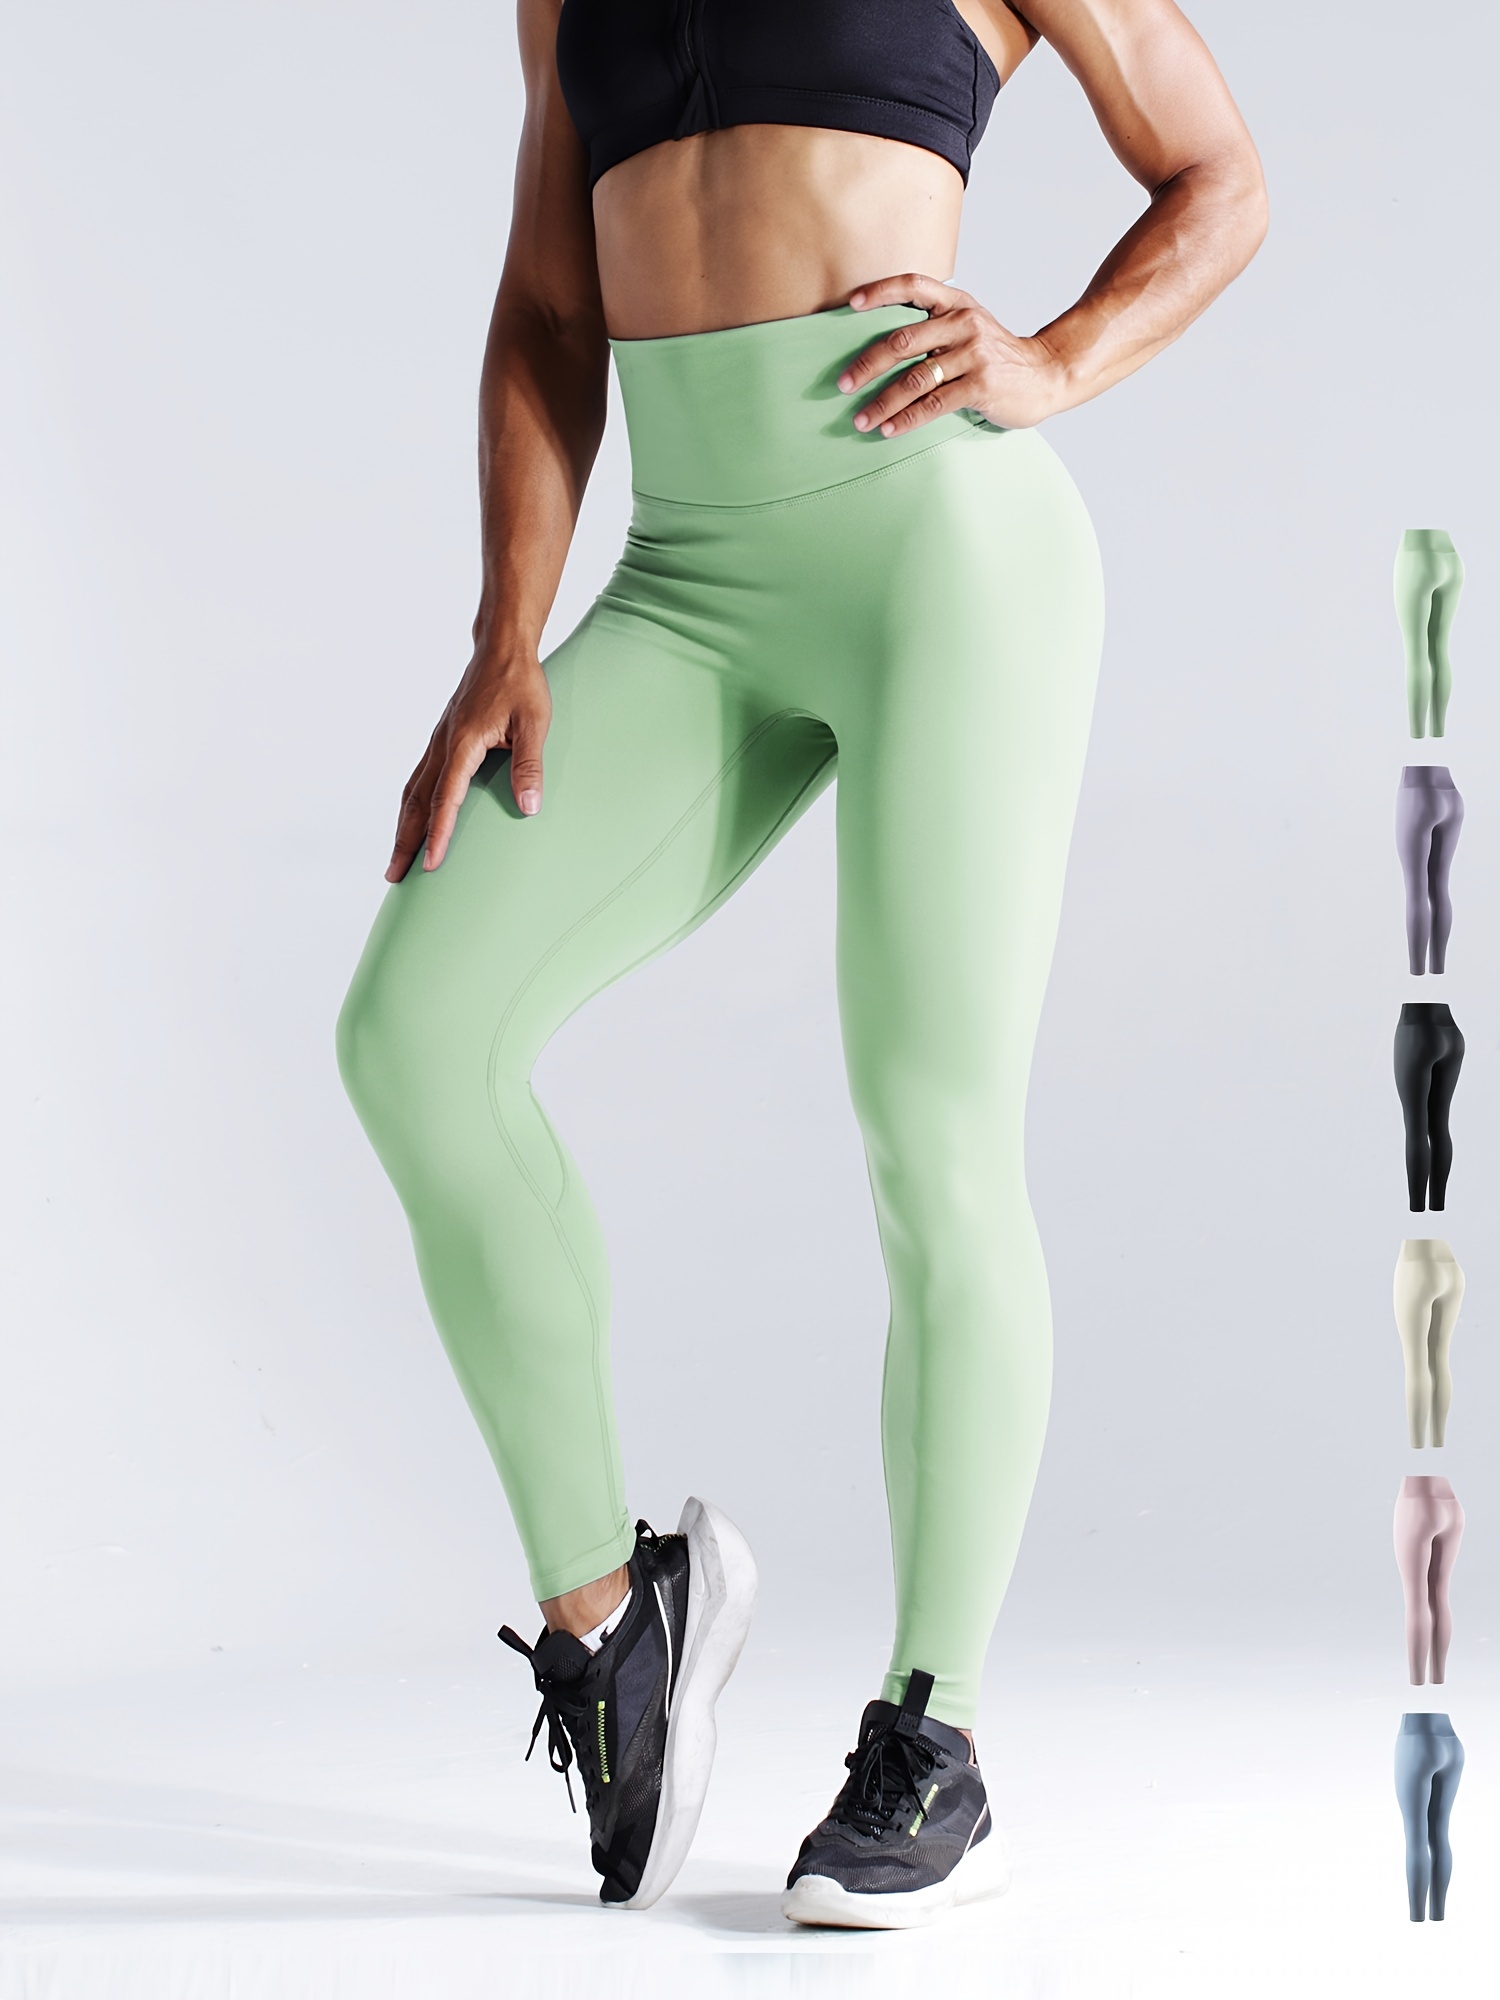 Sheer Yoga Pants Women Legging Sports pants Solid Color High Waist Gym Wear  Fitness Athletic Leggings Elastic Trousers Girls63